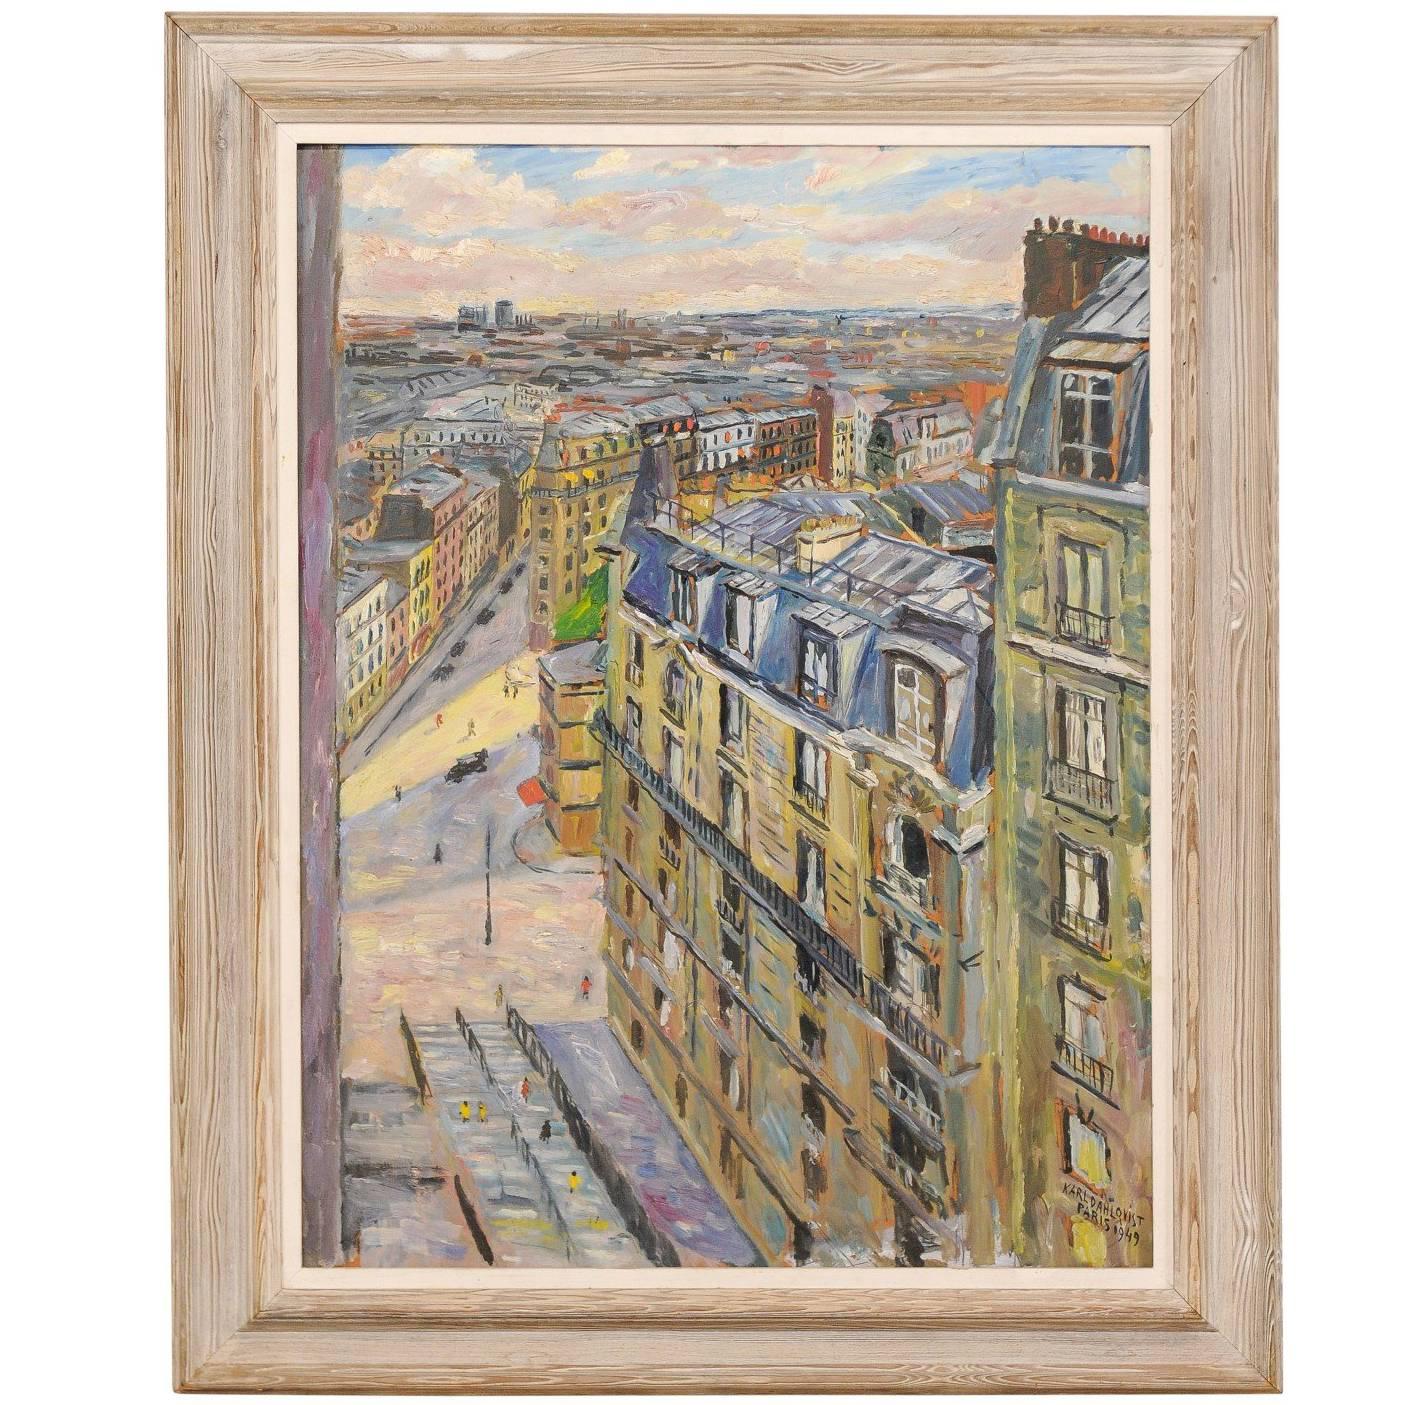 What makes Paris Street; Rainy Day impressionist?